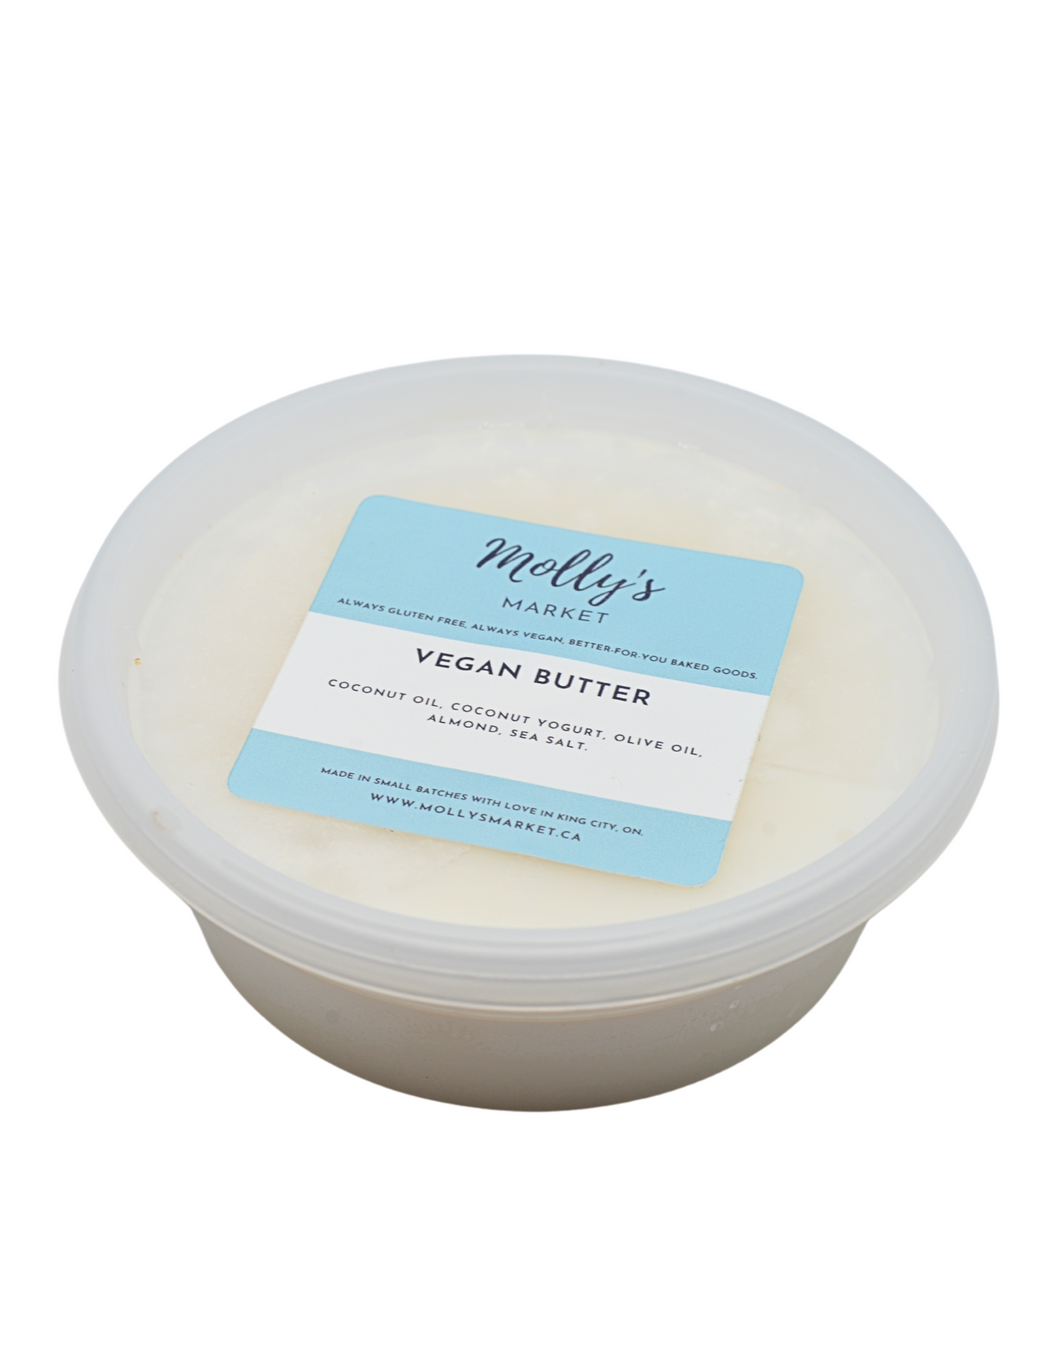 Molly's Vegan Butter